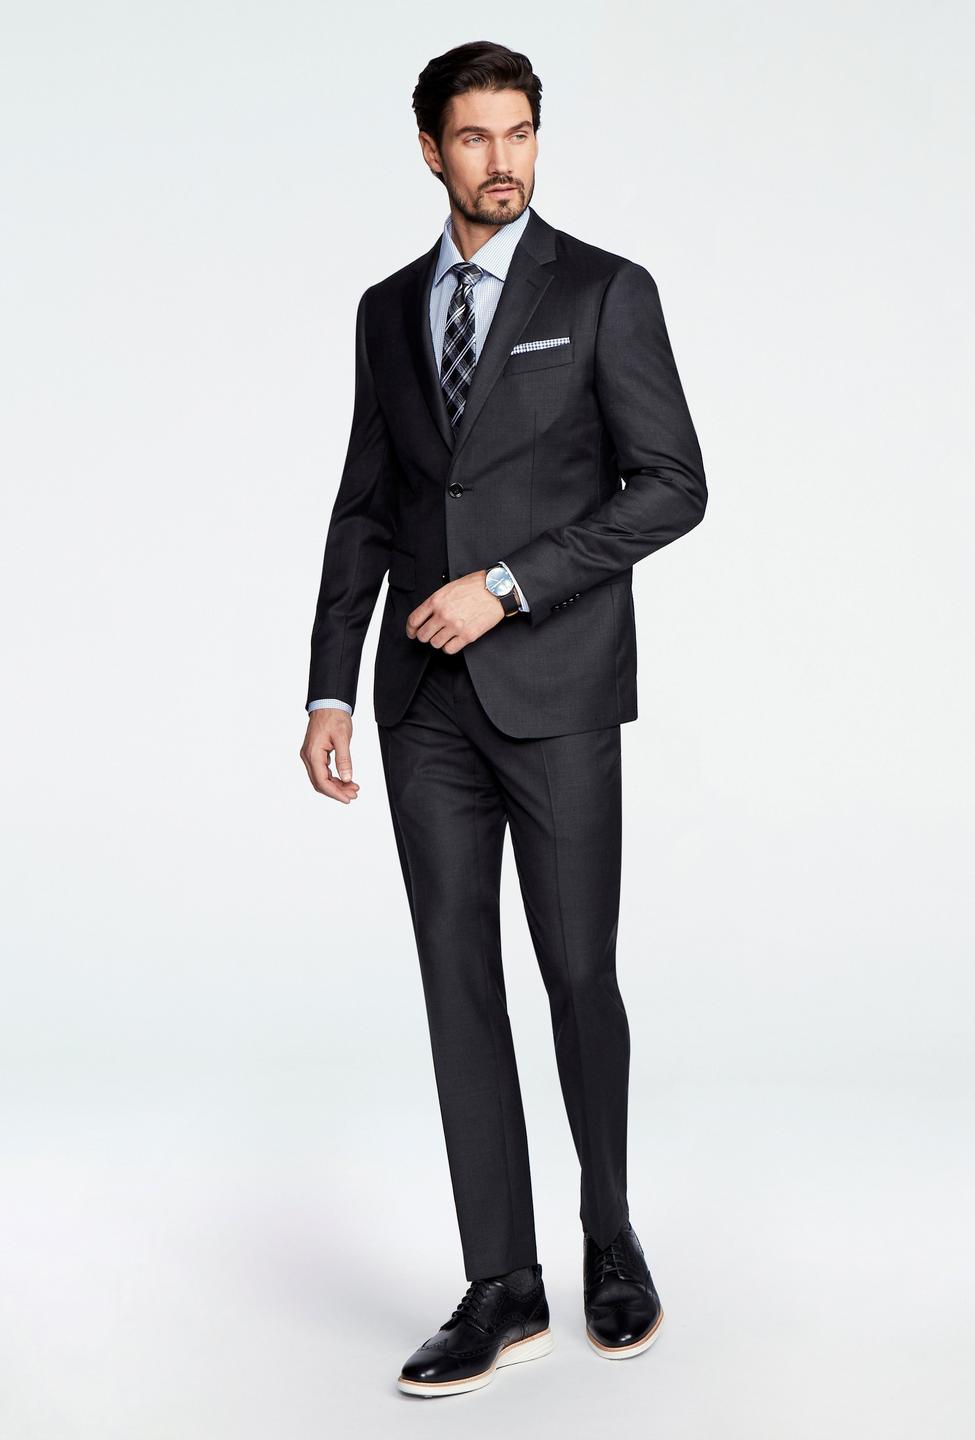 Gray blazer - Hemsworth Solid Design from Premium Indochino Collection